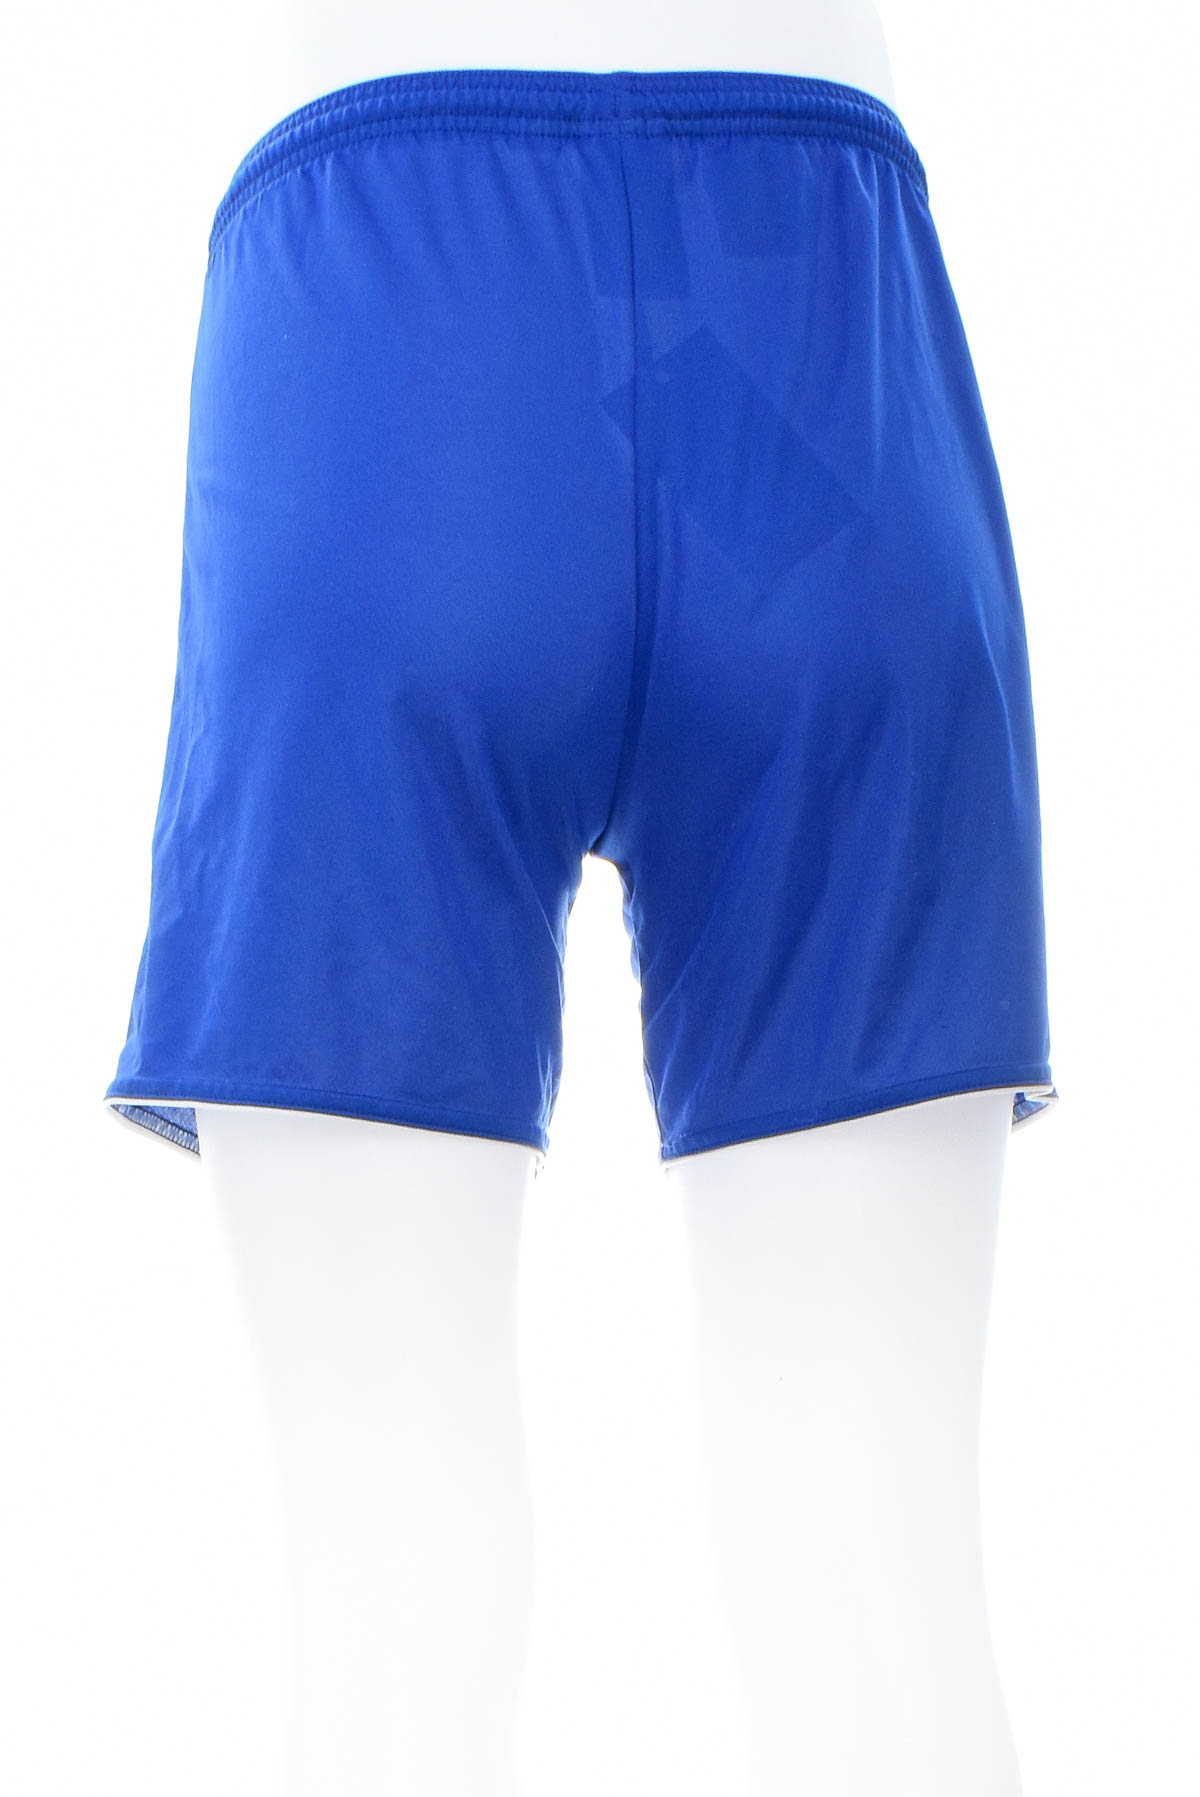 Men's shorts - Adidas - 1